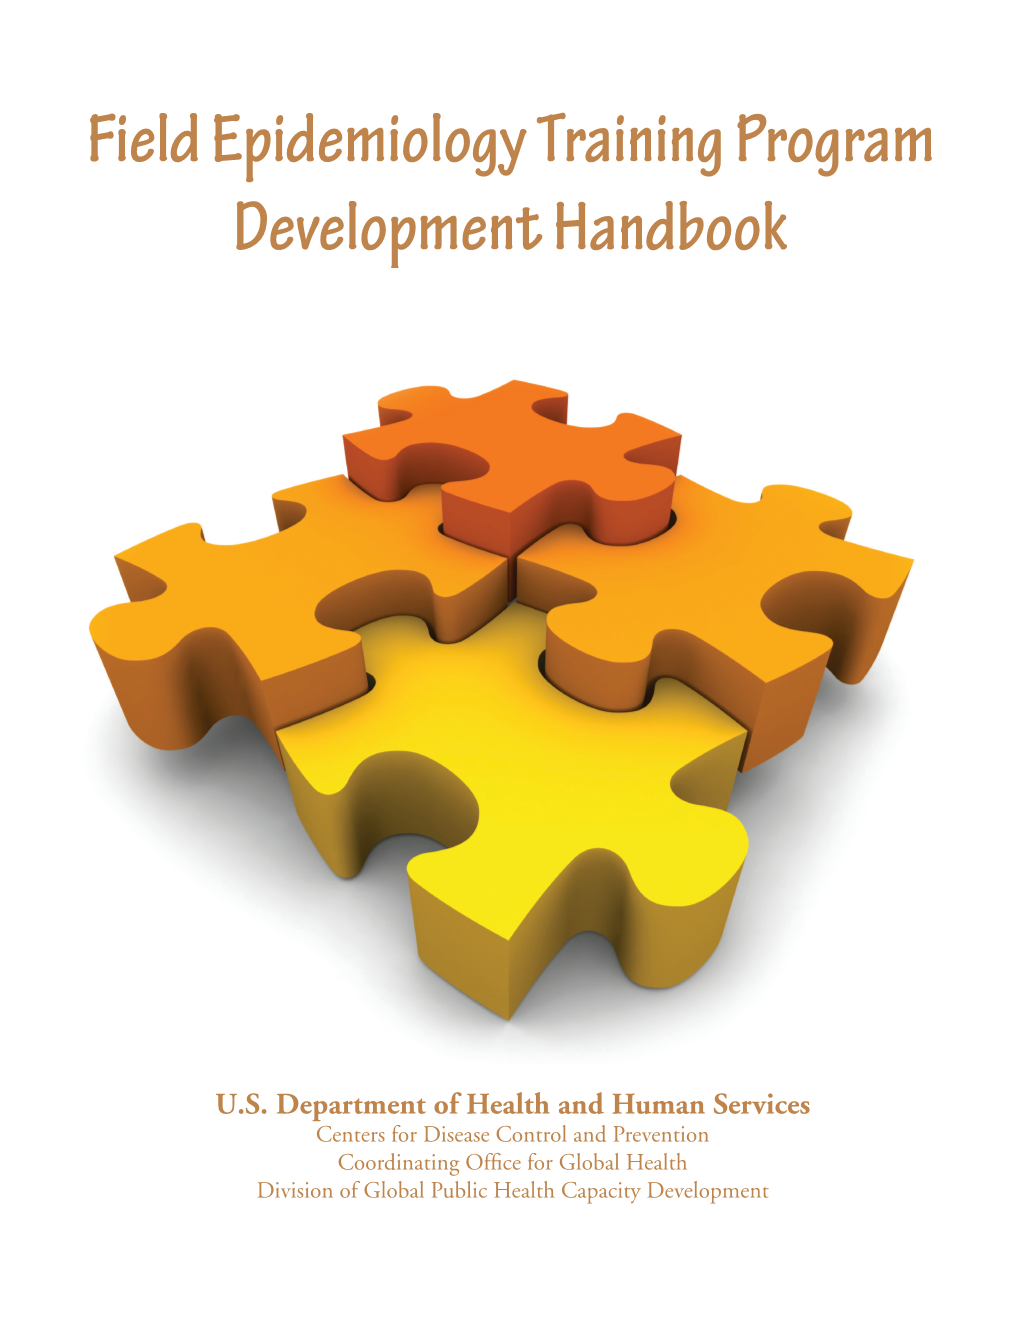 Field Epidemiology Training Program Development Handbook